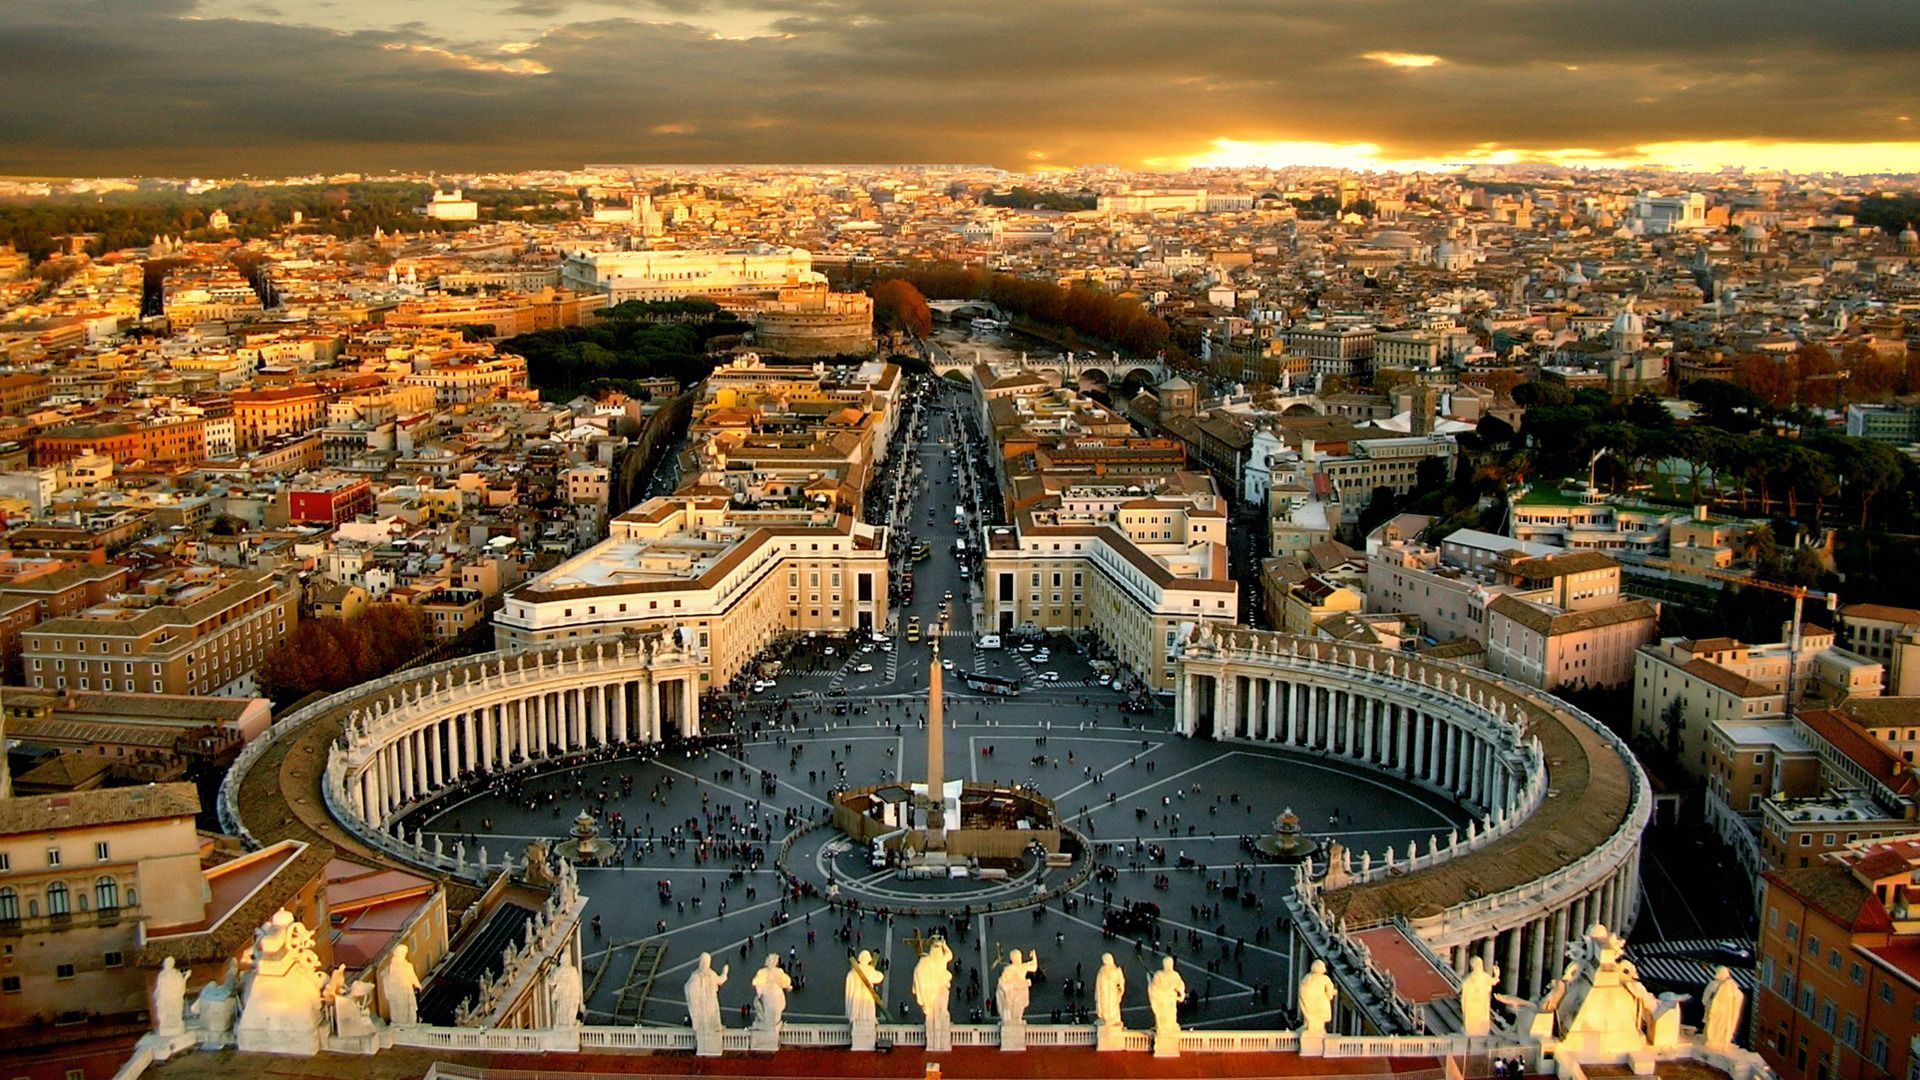 Buildings & City: Vatican City, desktop wallpaper nr. 53782 by gadkoij